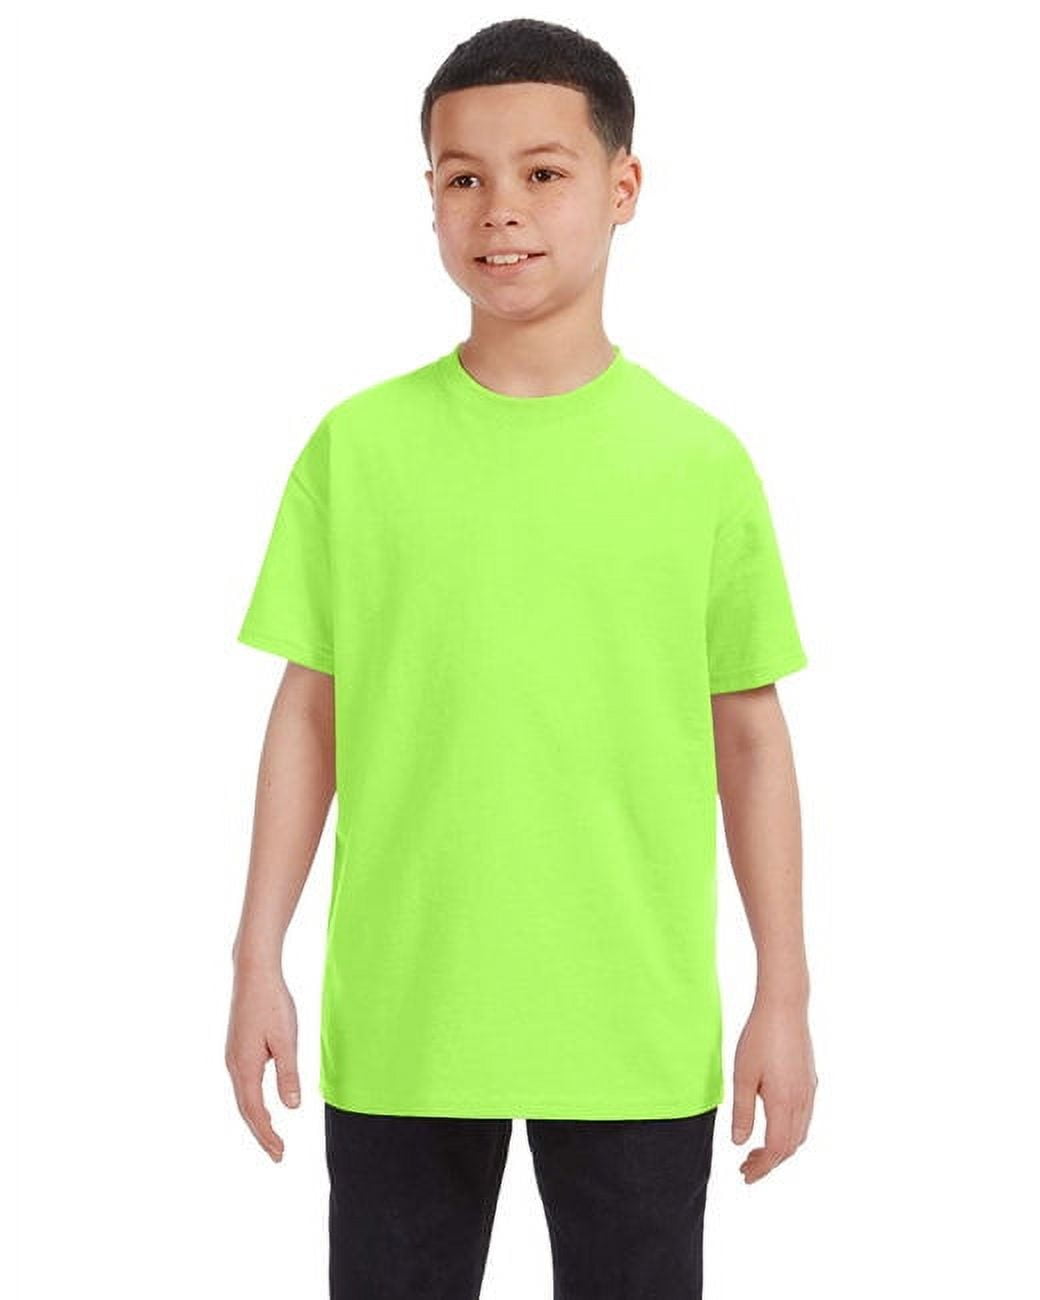 T-Shirt, Cotton Neon Green XS Youth Gildan 3 Heavy Boys Pack